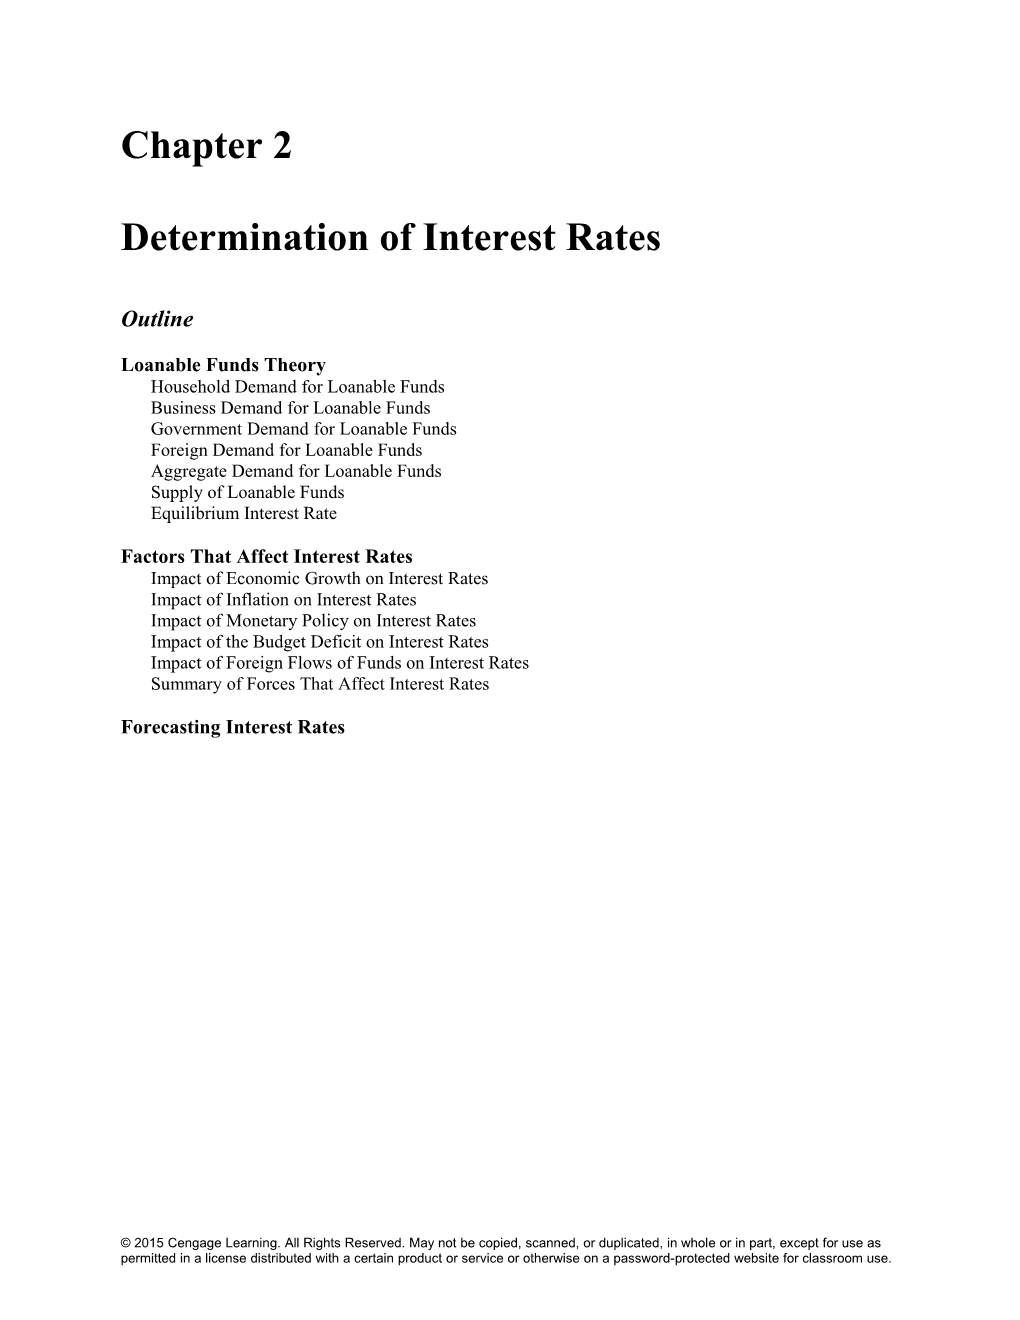 Determination of Interest Rates